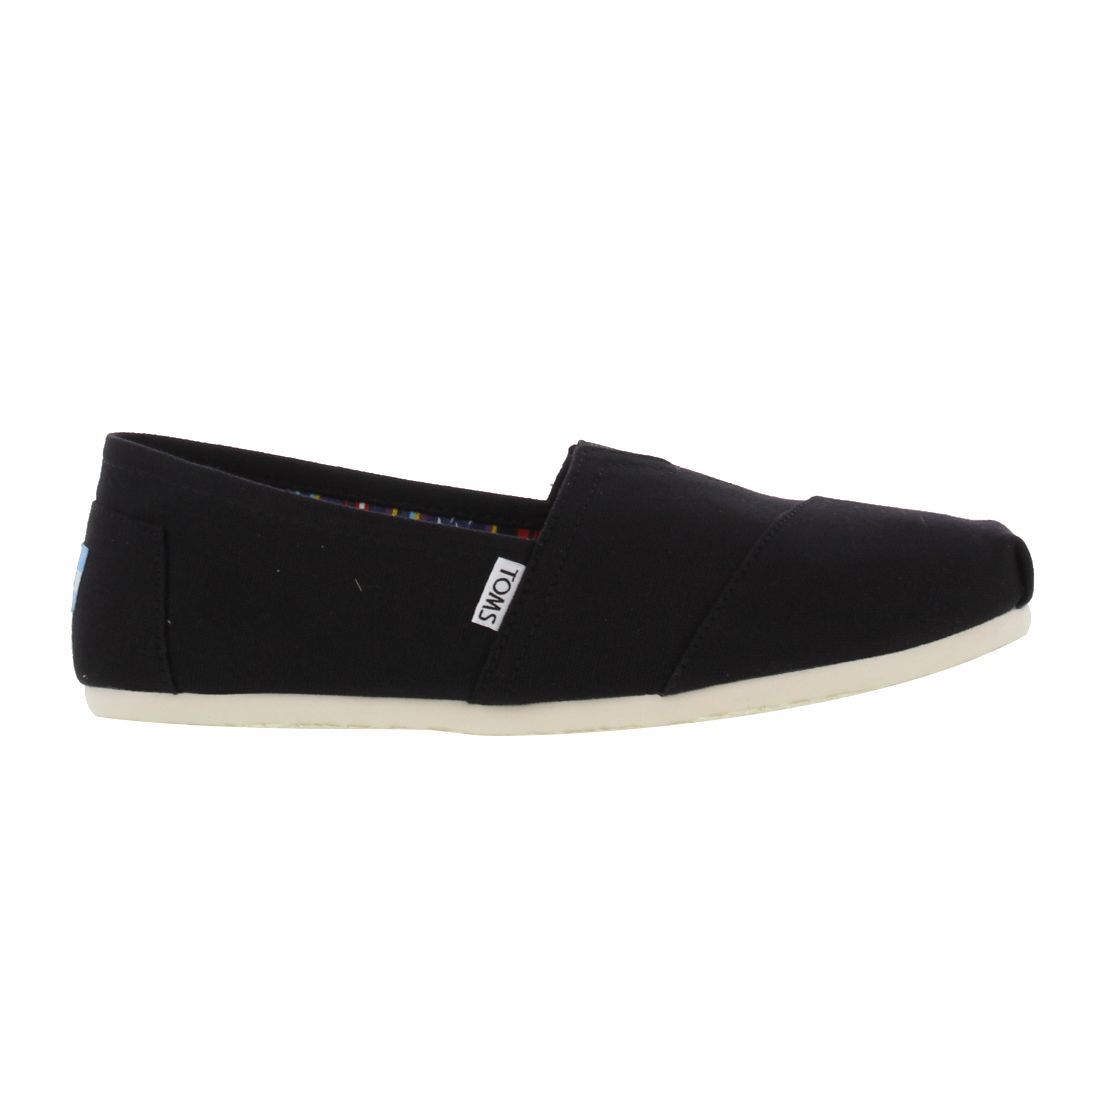 TOMS Mens Classic Alpargata Slip On Espadrille Shoes - Black White 2951